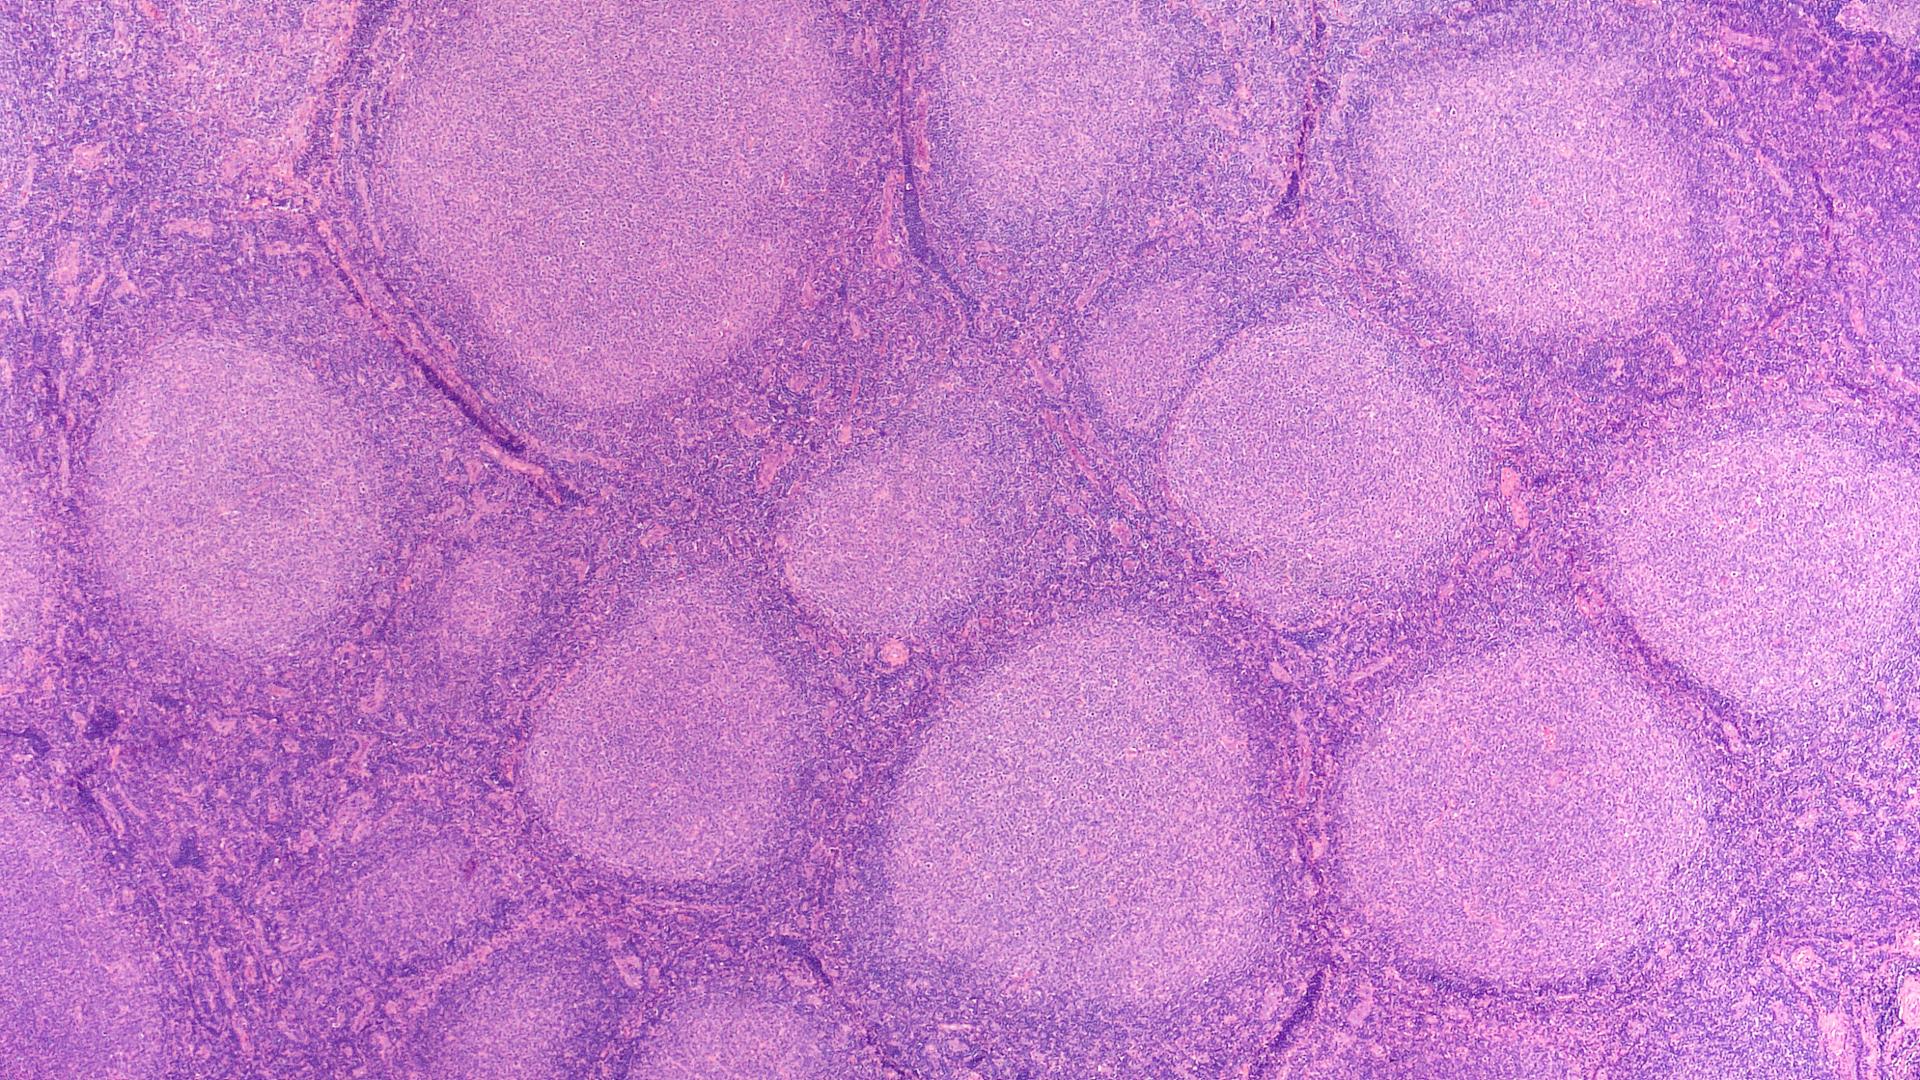 Microscope slide showing follicular lymphoma cells